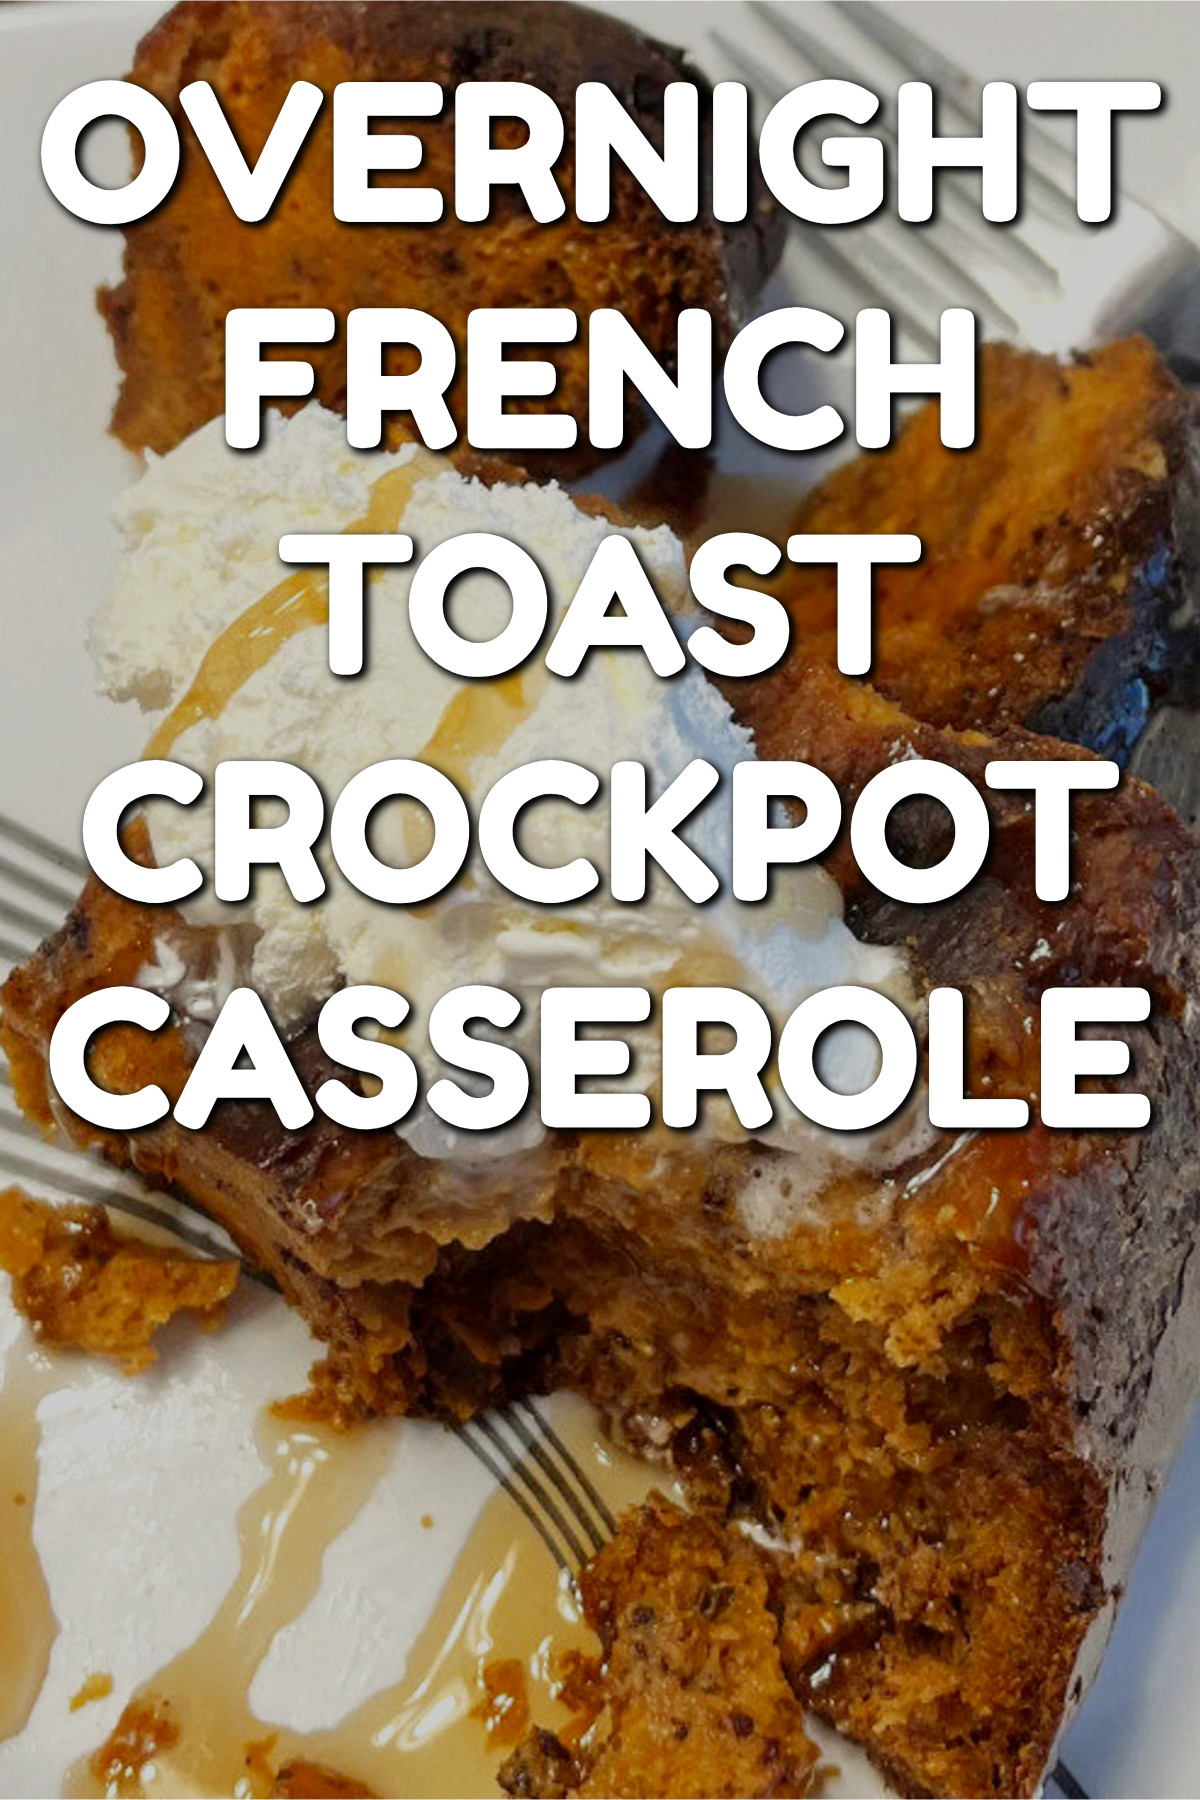 brunch food ideas - Overnight French Toast Crockpot Casserole